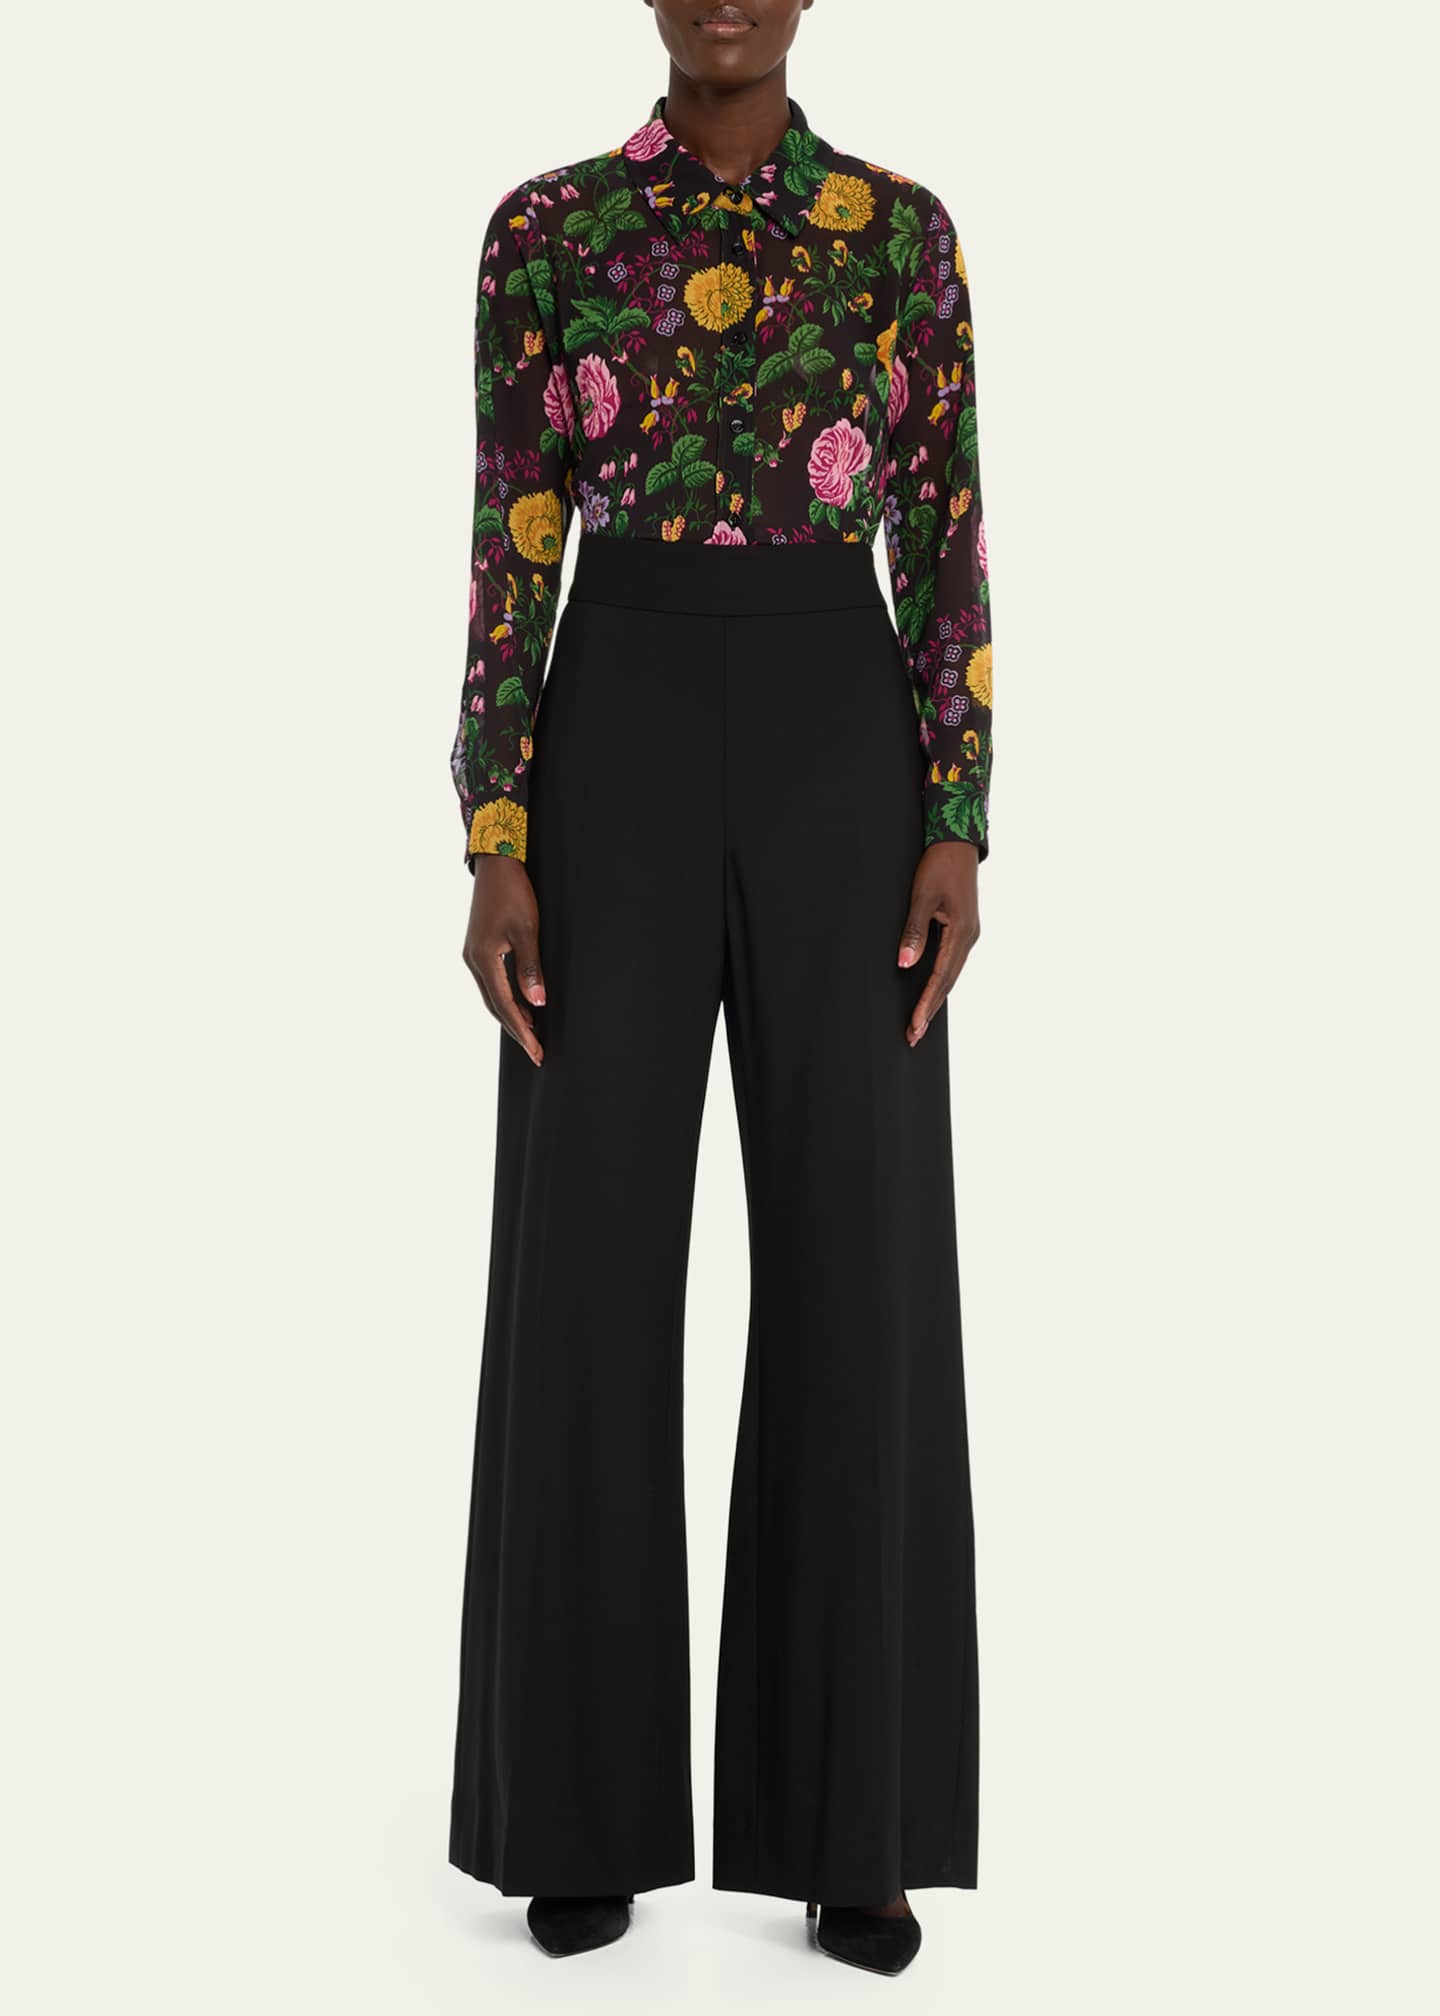 Carolina Herrera Sheer Floral Print Button-Front Shirt - Bergdorf Goodman